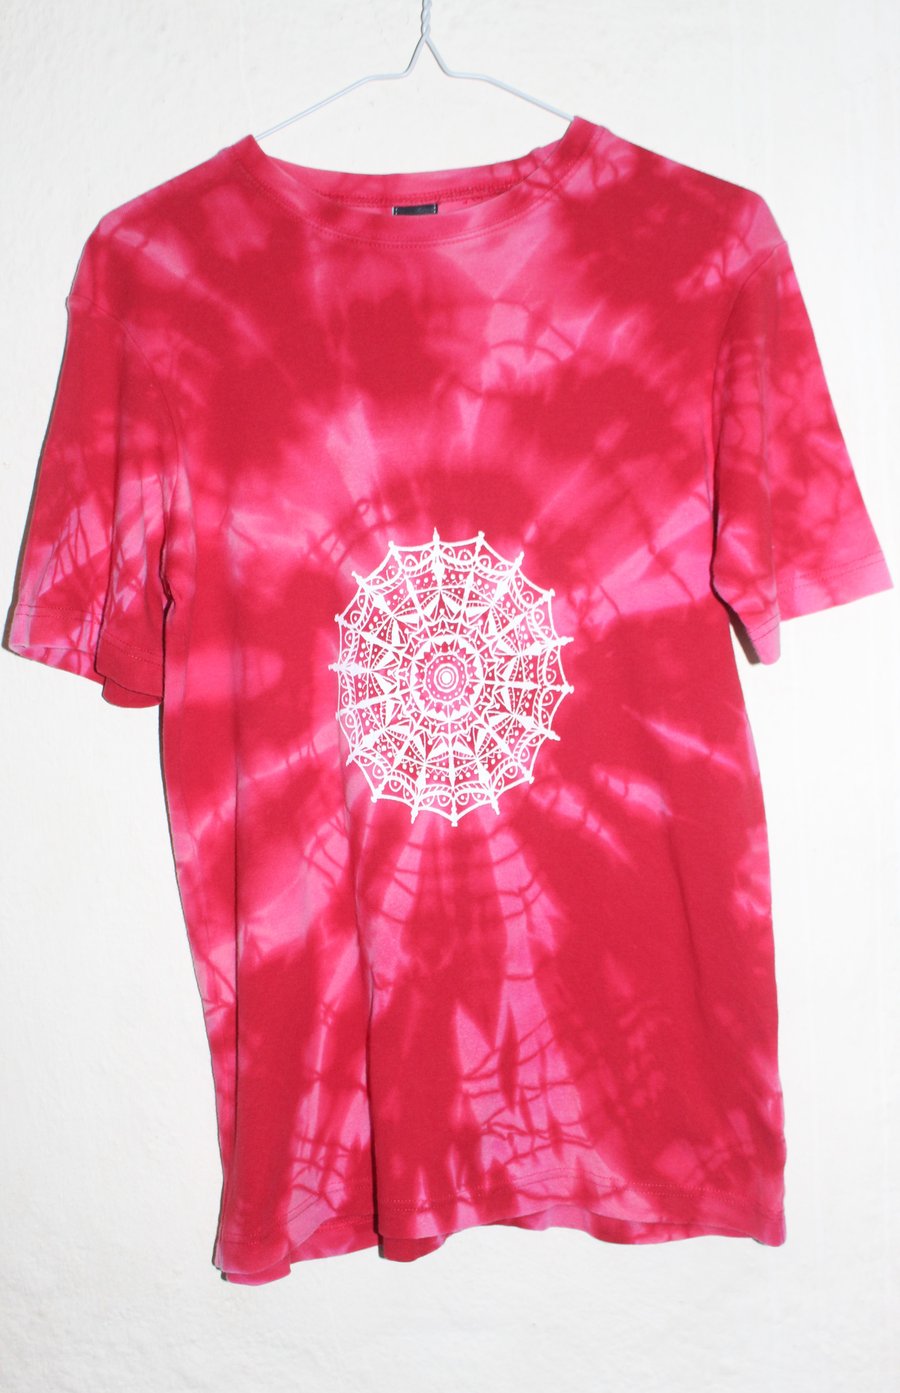 Mandala print T shirt, Unisex red target tie dye cotton top,size M,Eco clothing